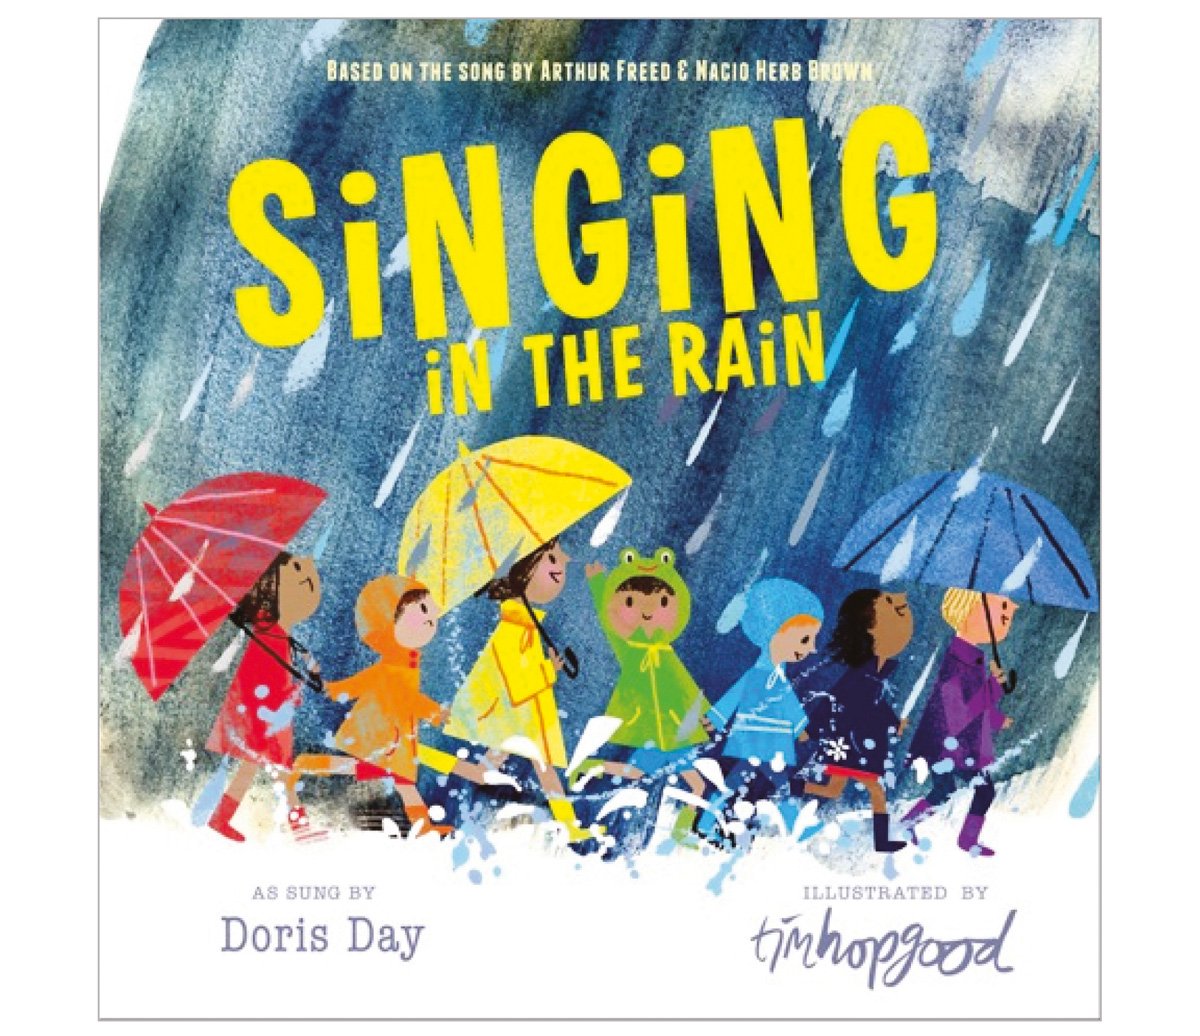 tim-hopgood-singing-in-the-rain-cover-illustration.jpg